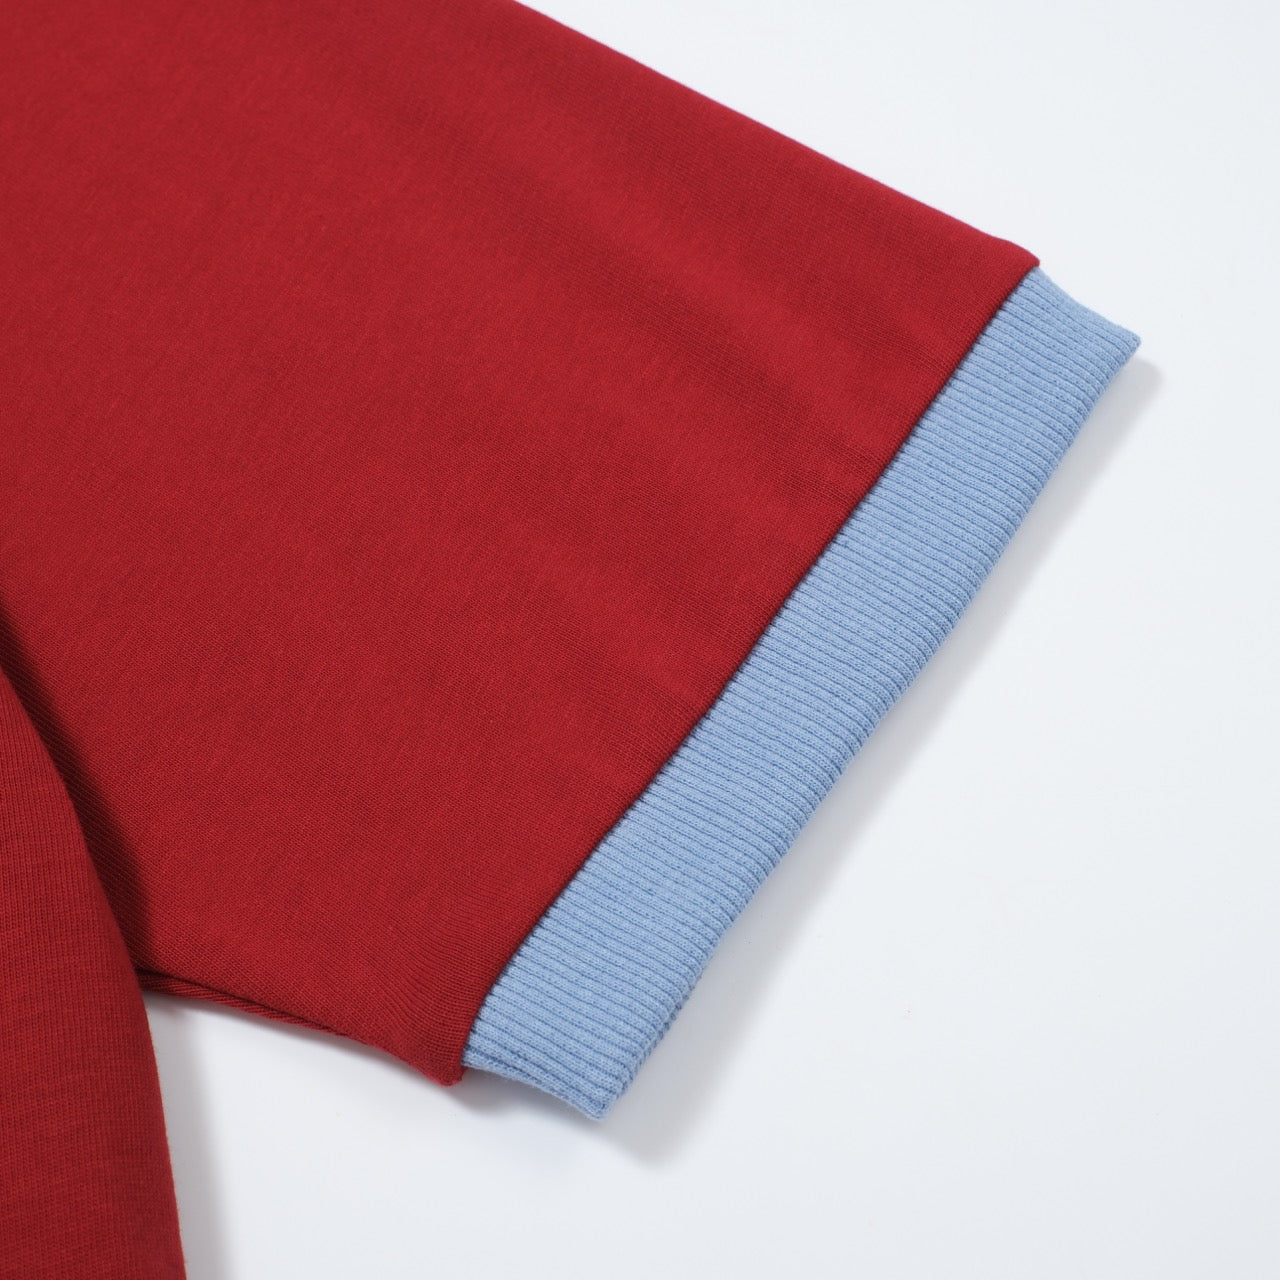 OXKNIT Men Vintage Clothing 1970s Mod Style Casual Mod Print Red Short Sleeve Bullseye Retro T-Shirt